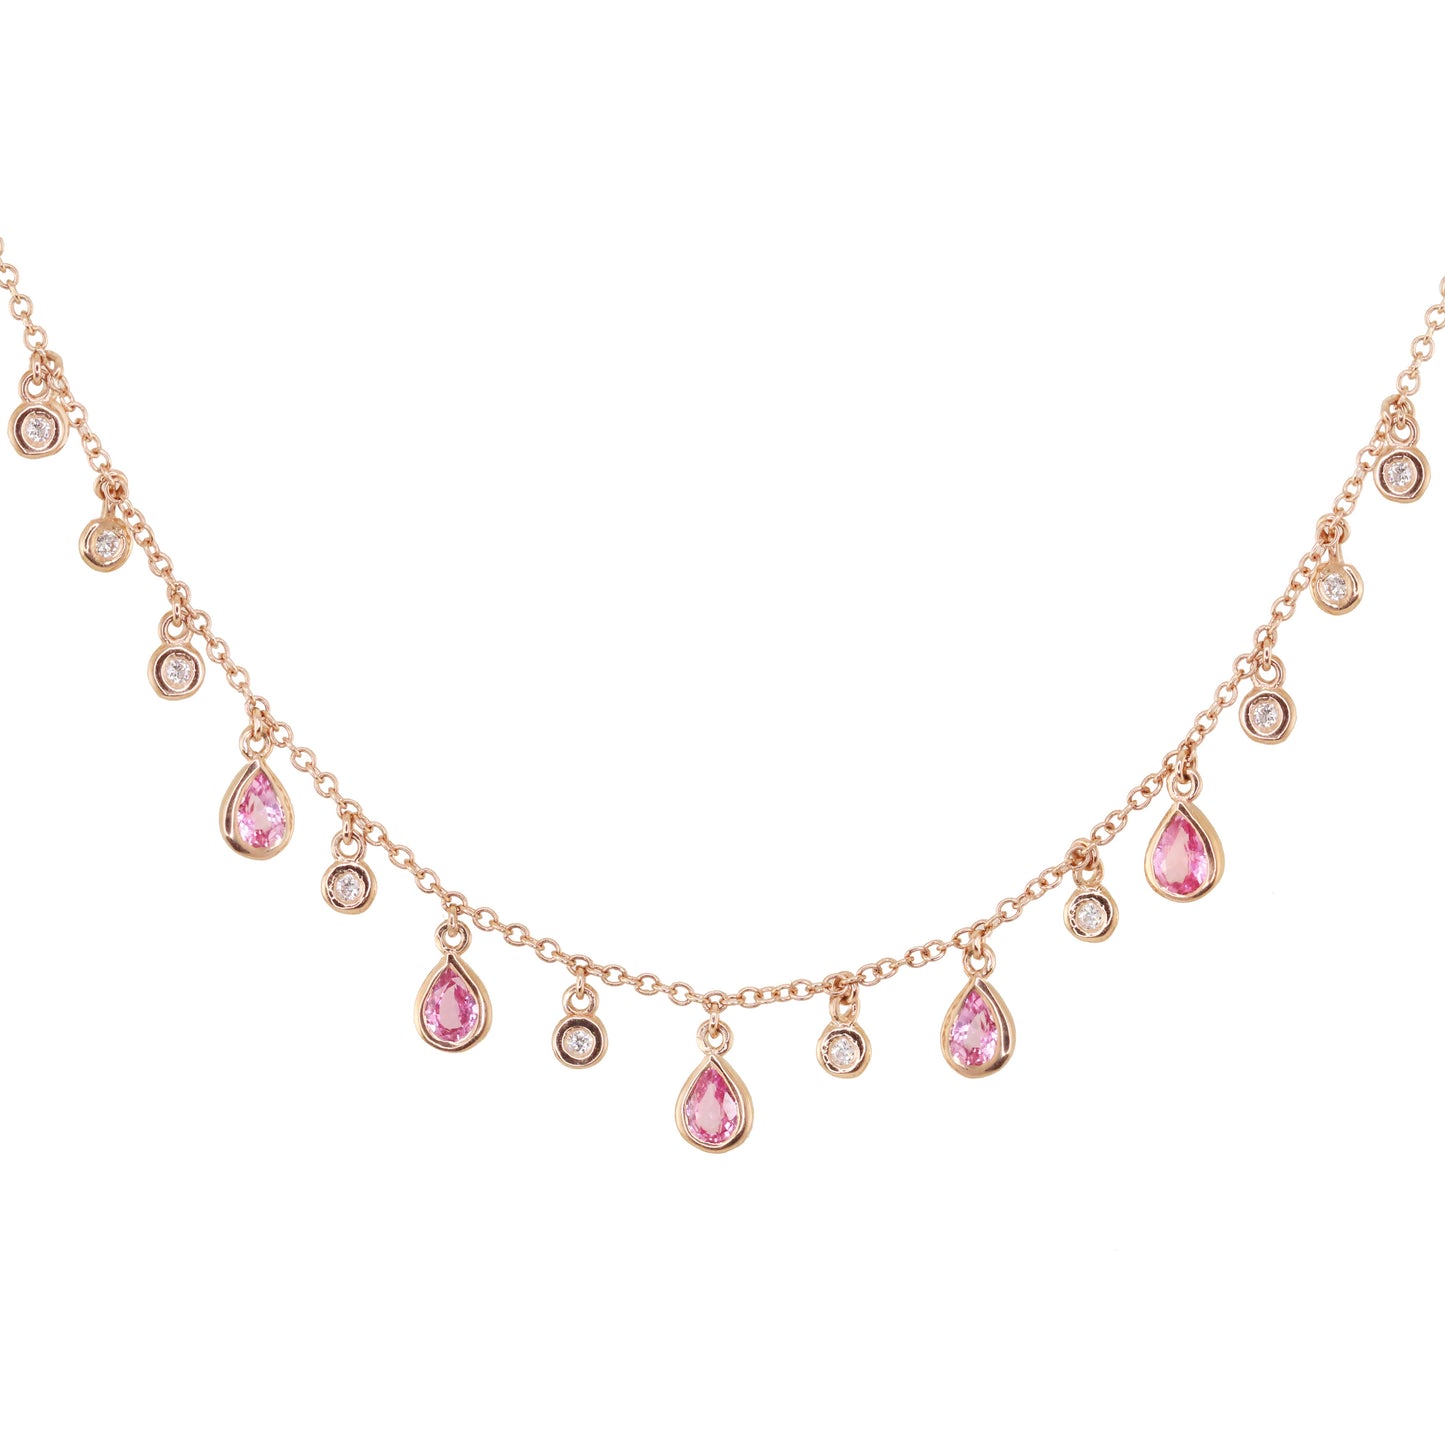 14k gold teardrop diamond necklaces